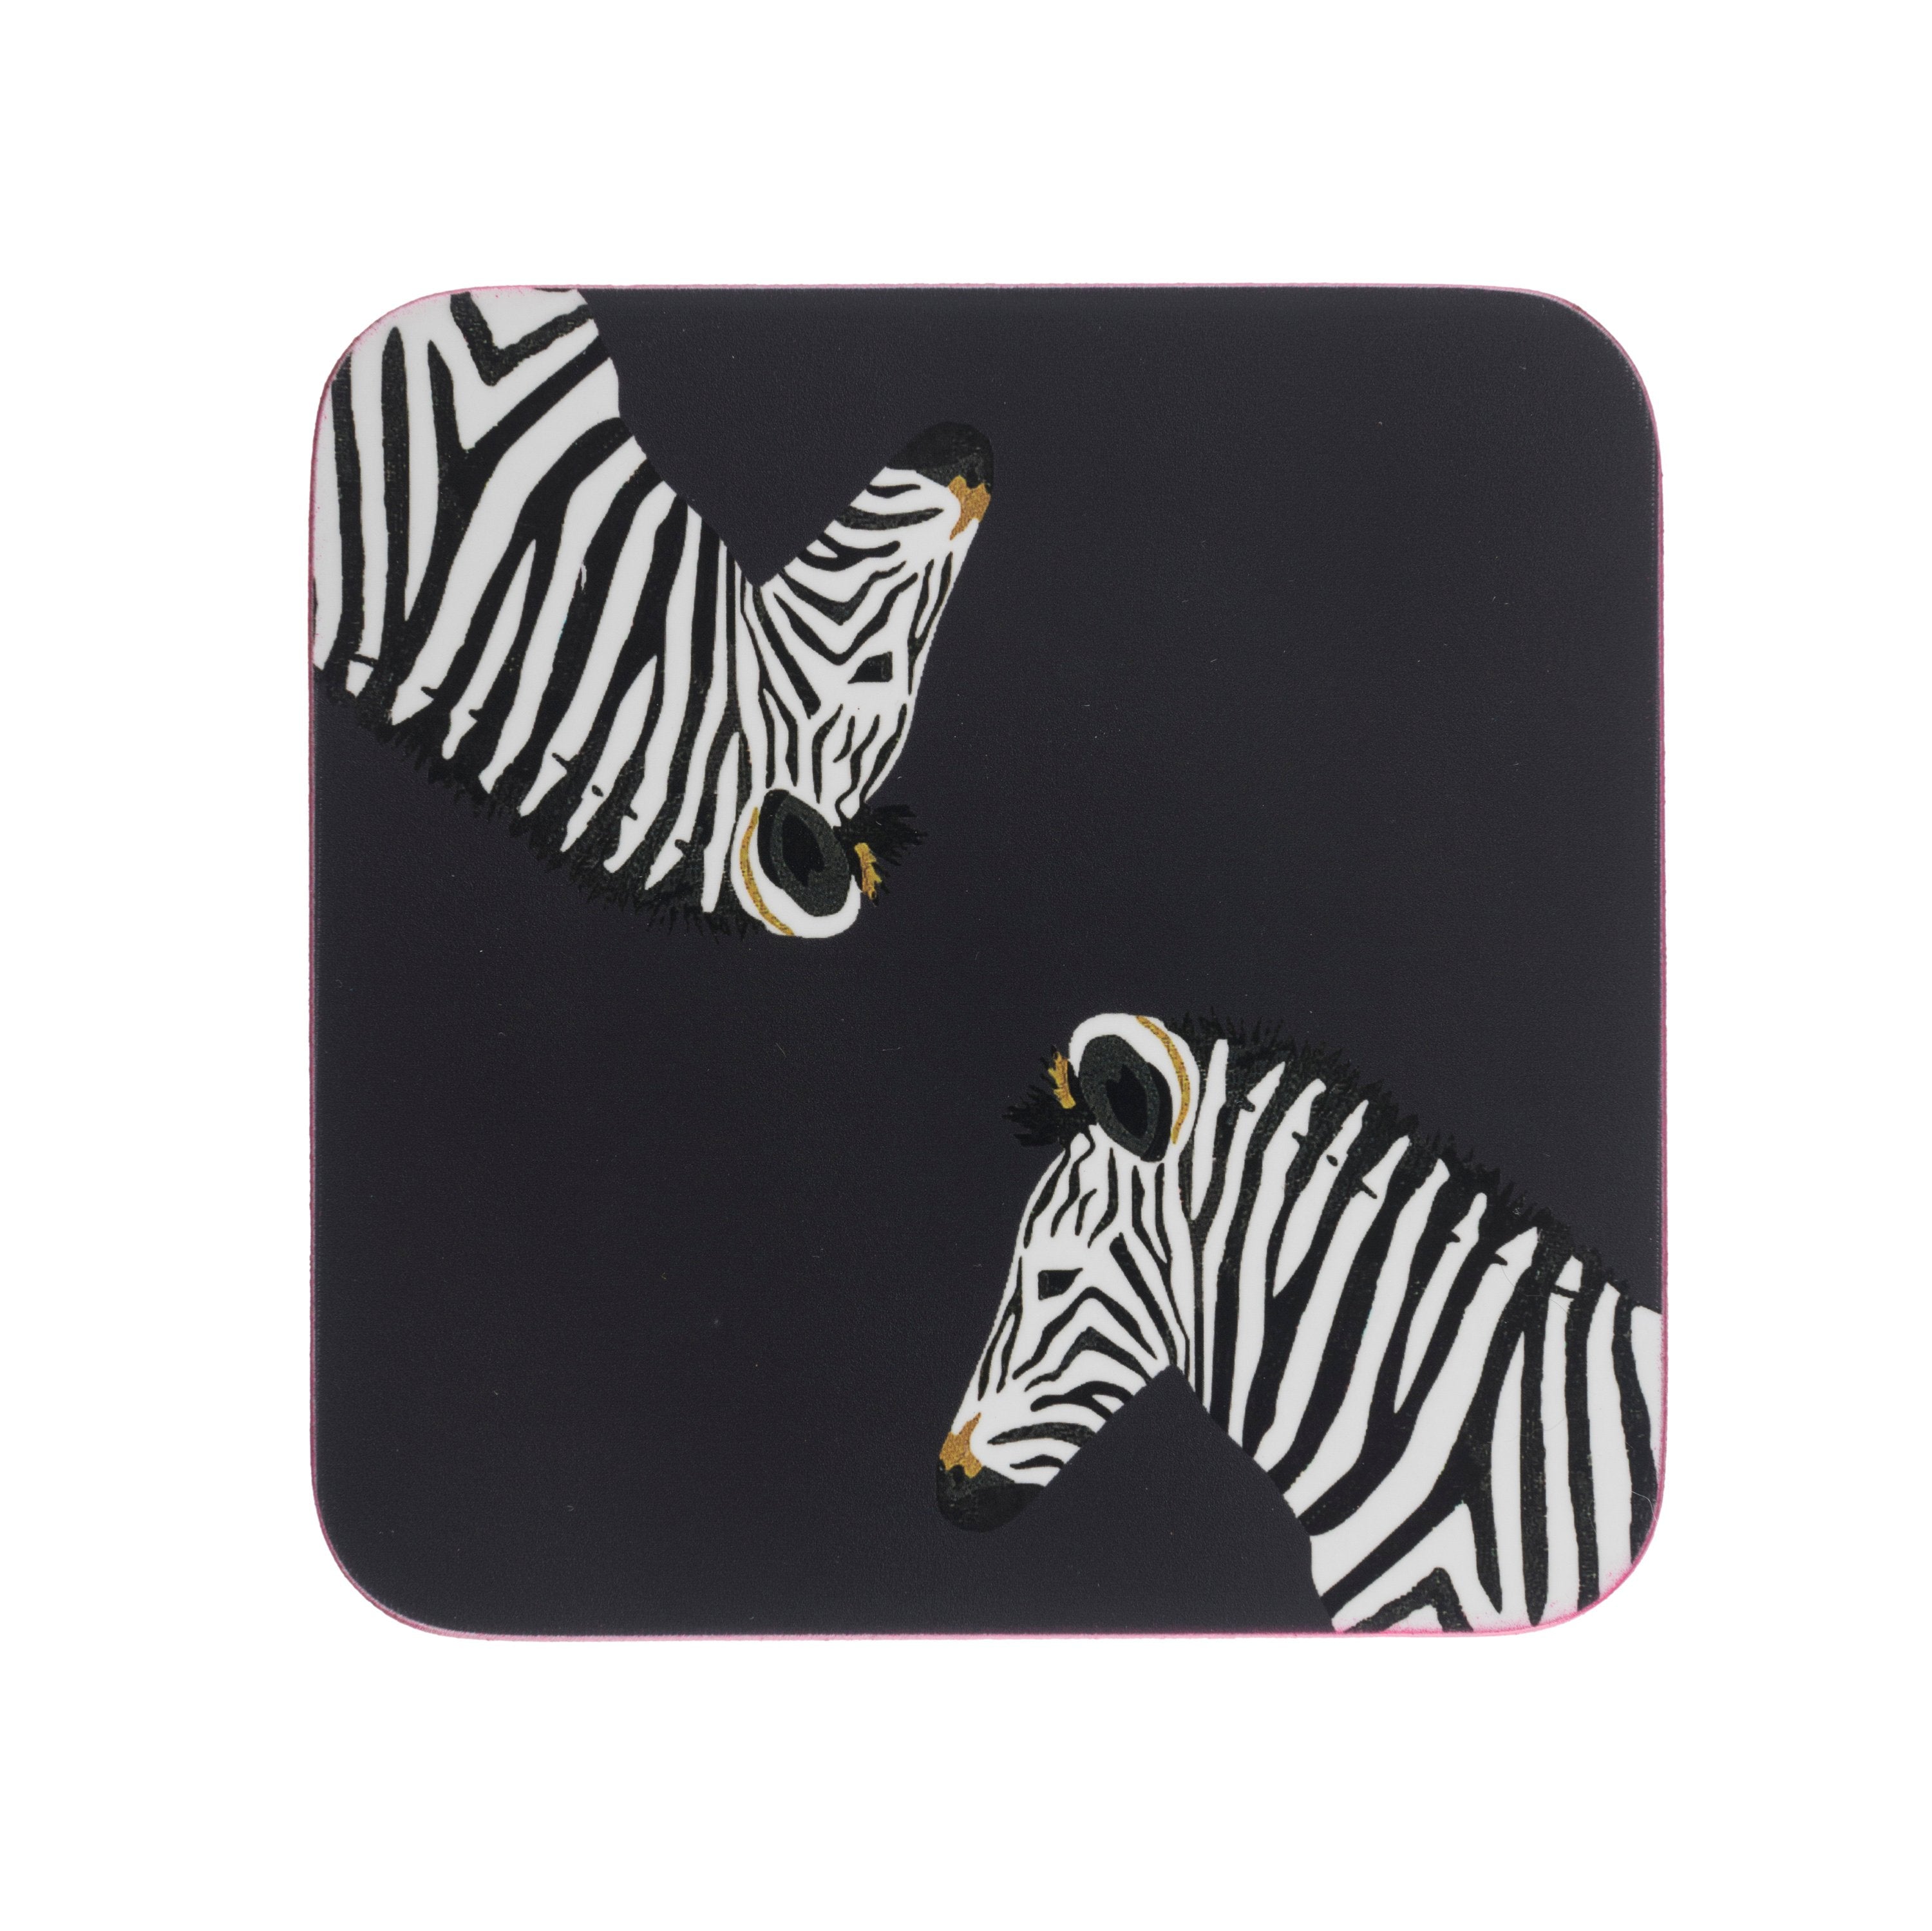 Zebra coasters